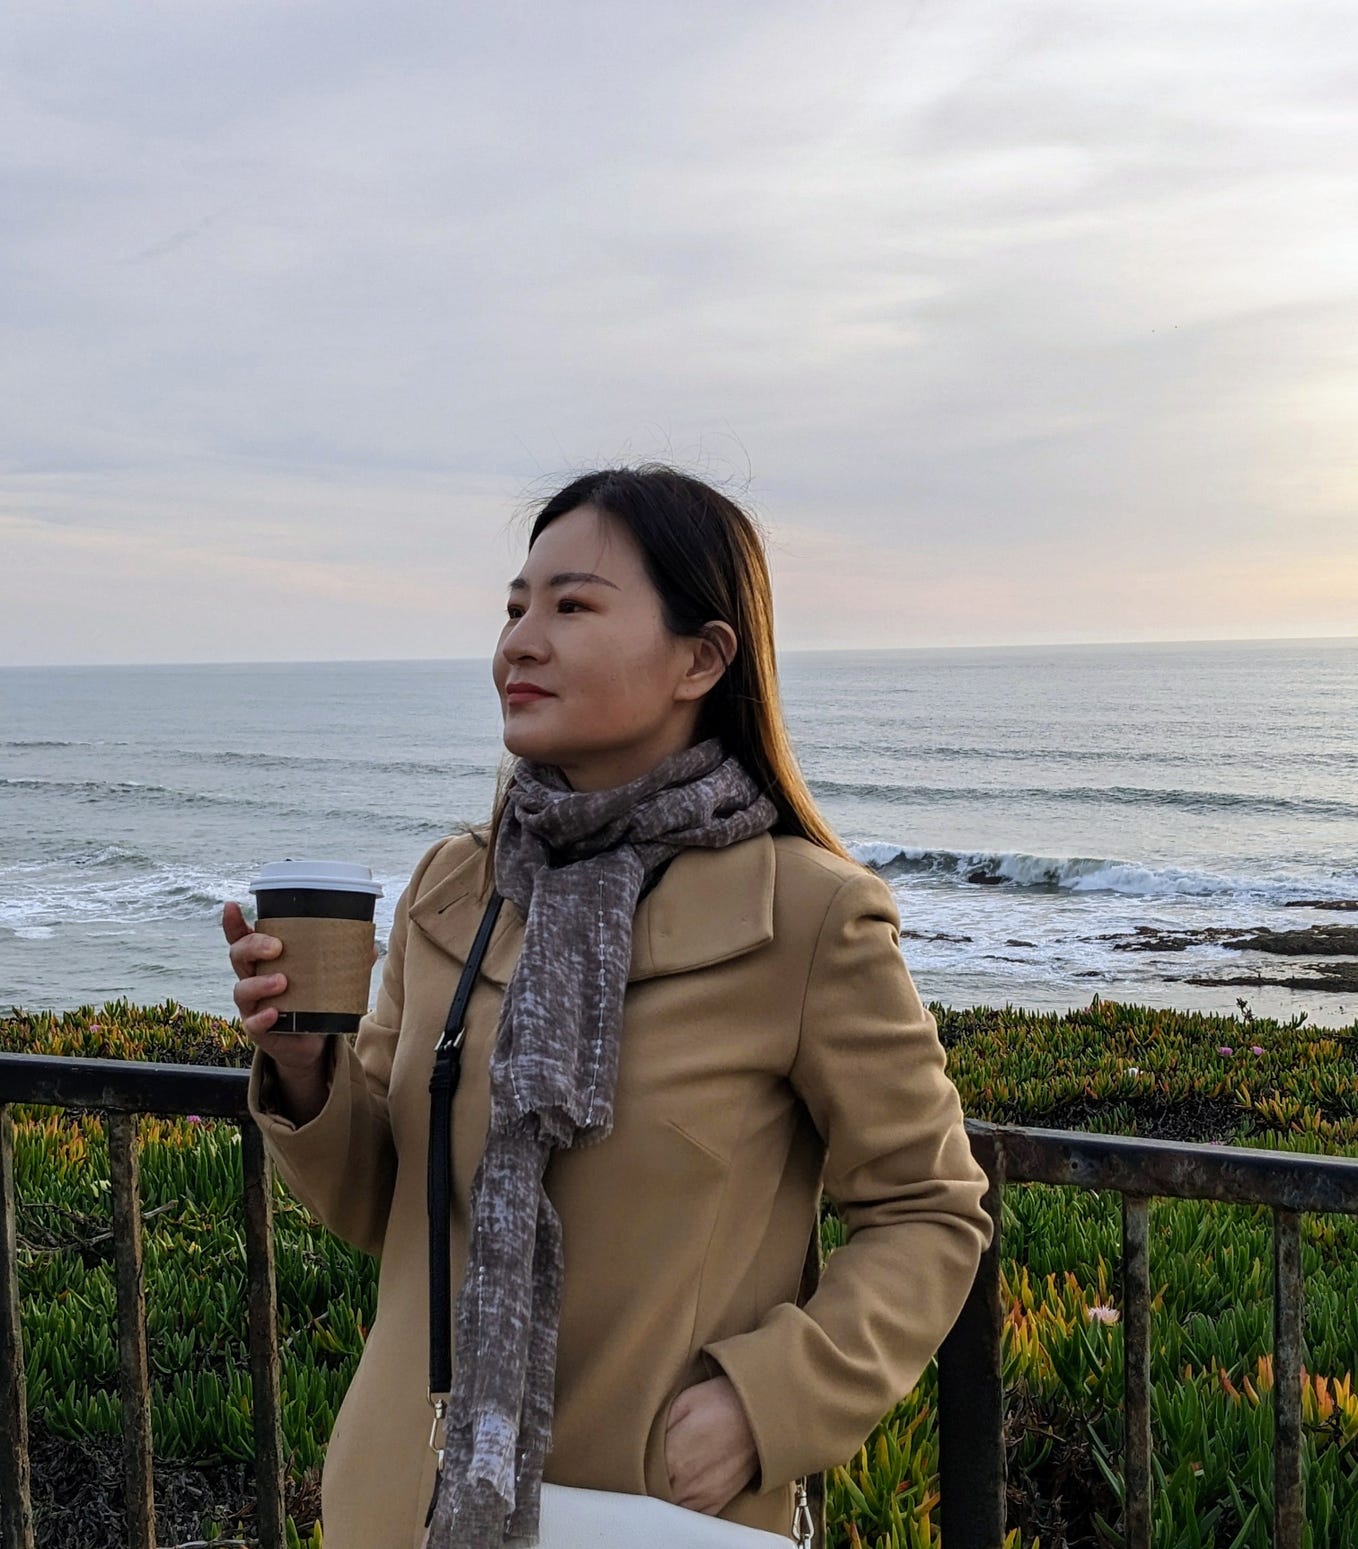 Felicia Wu holds a cup of coffee looking ahead on the Half Moon Bay coastline.